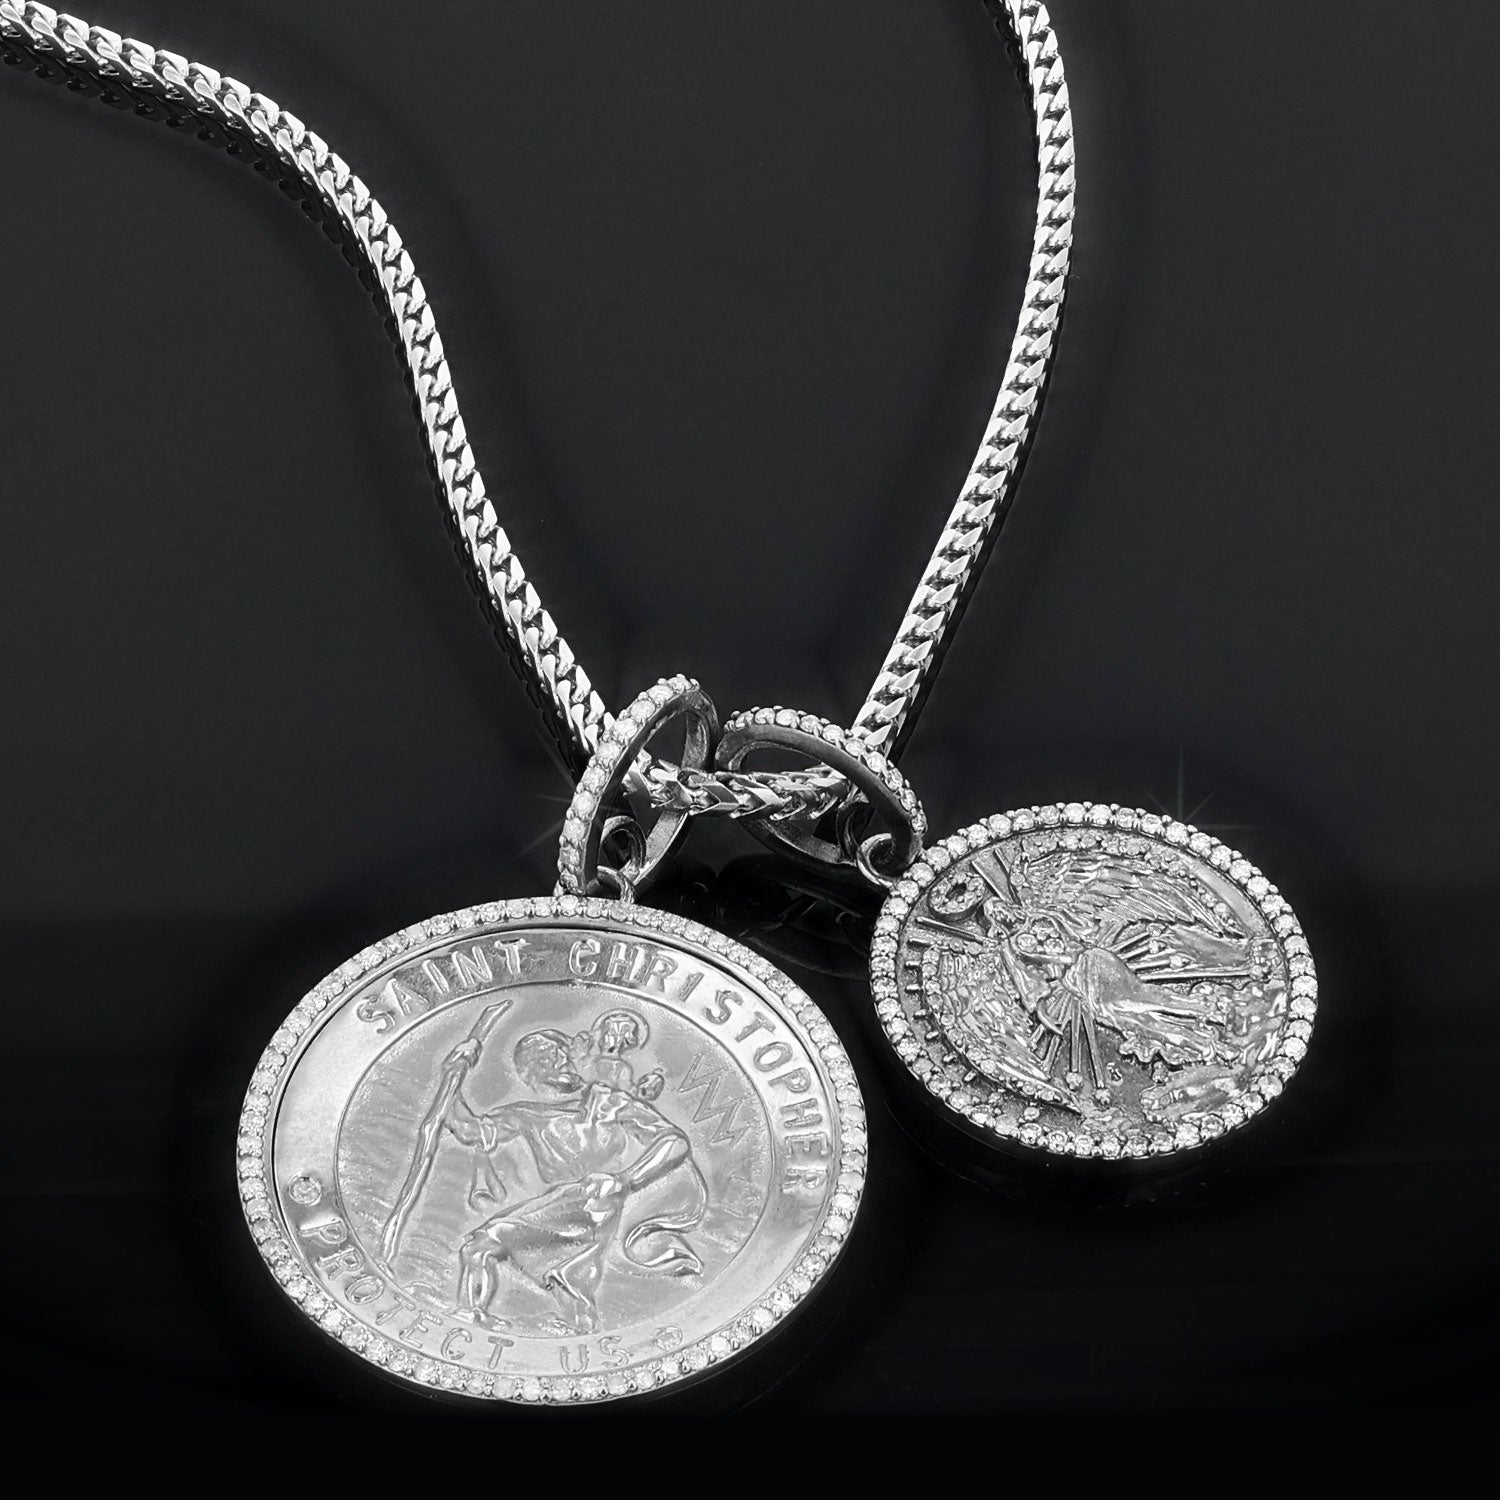 925 Sterling Silver Medal Pendant: St Christopher 1– Made in France